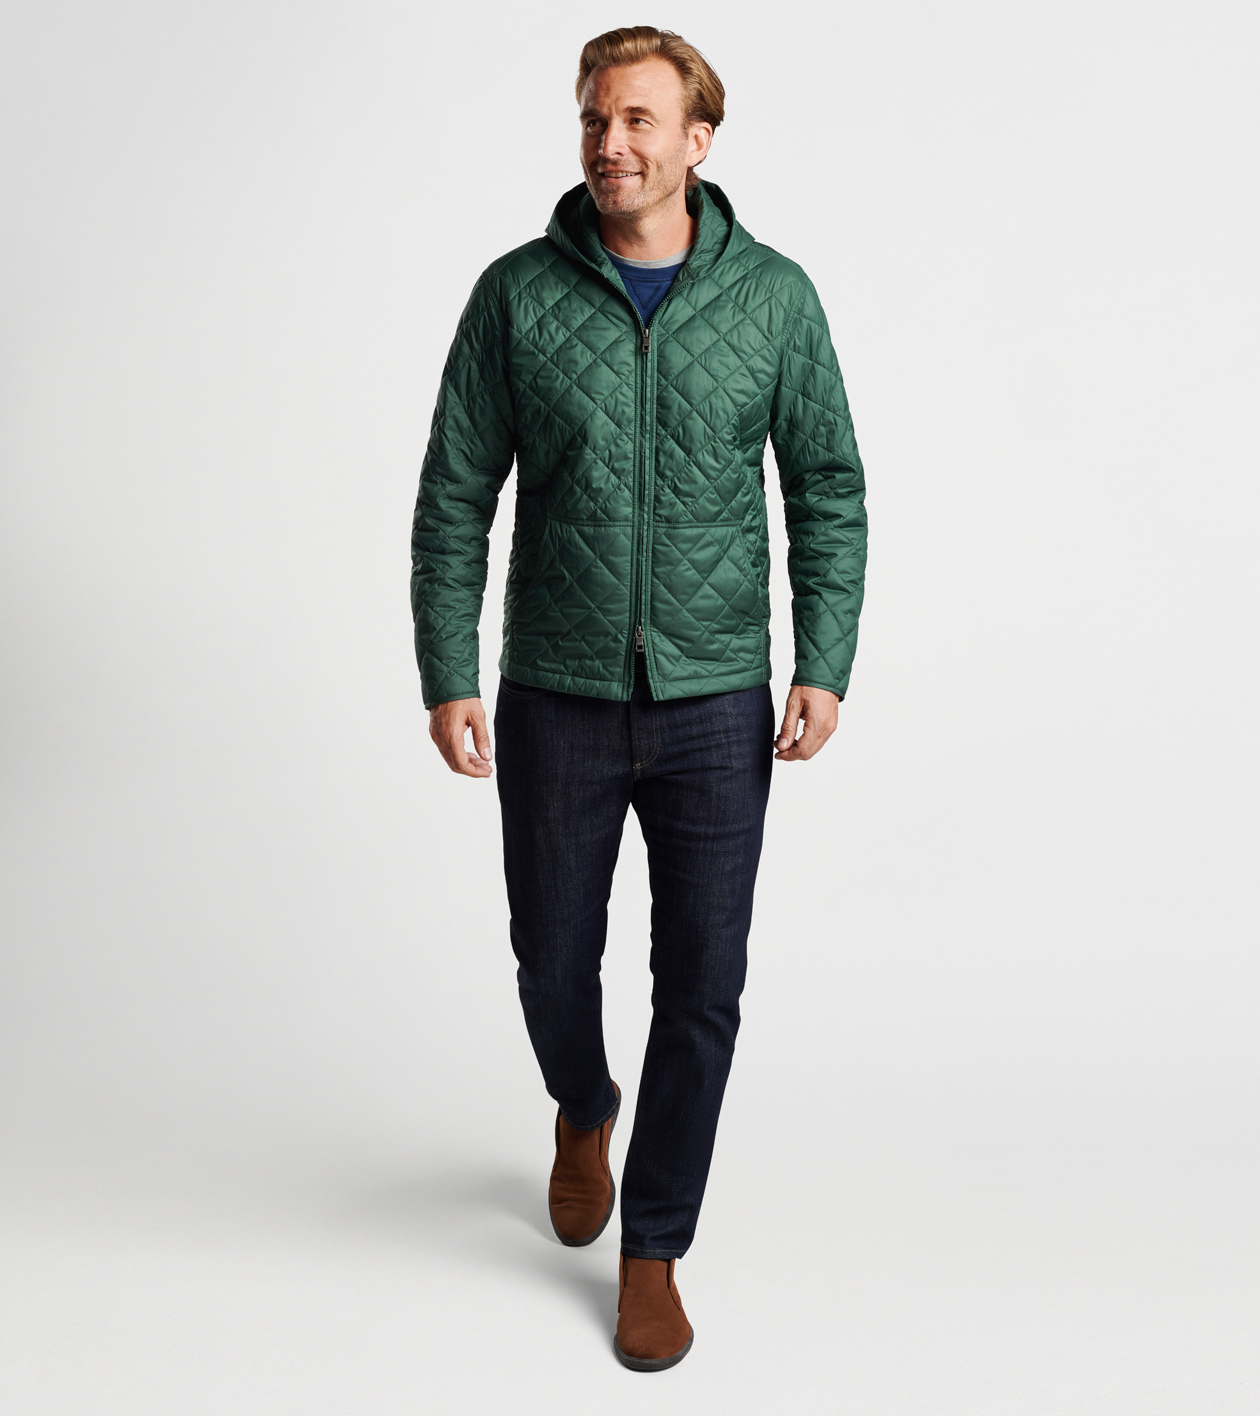 Peter Millar Essex Quilted Full Zip Hoodie Jacket - Navy - Nowells Clothiers